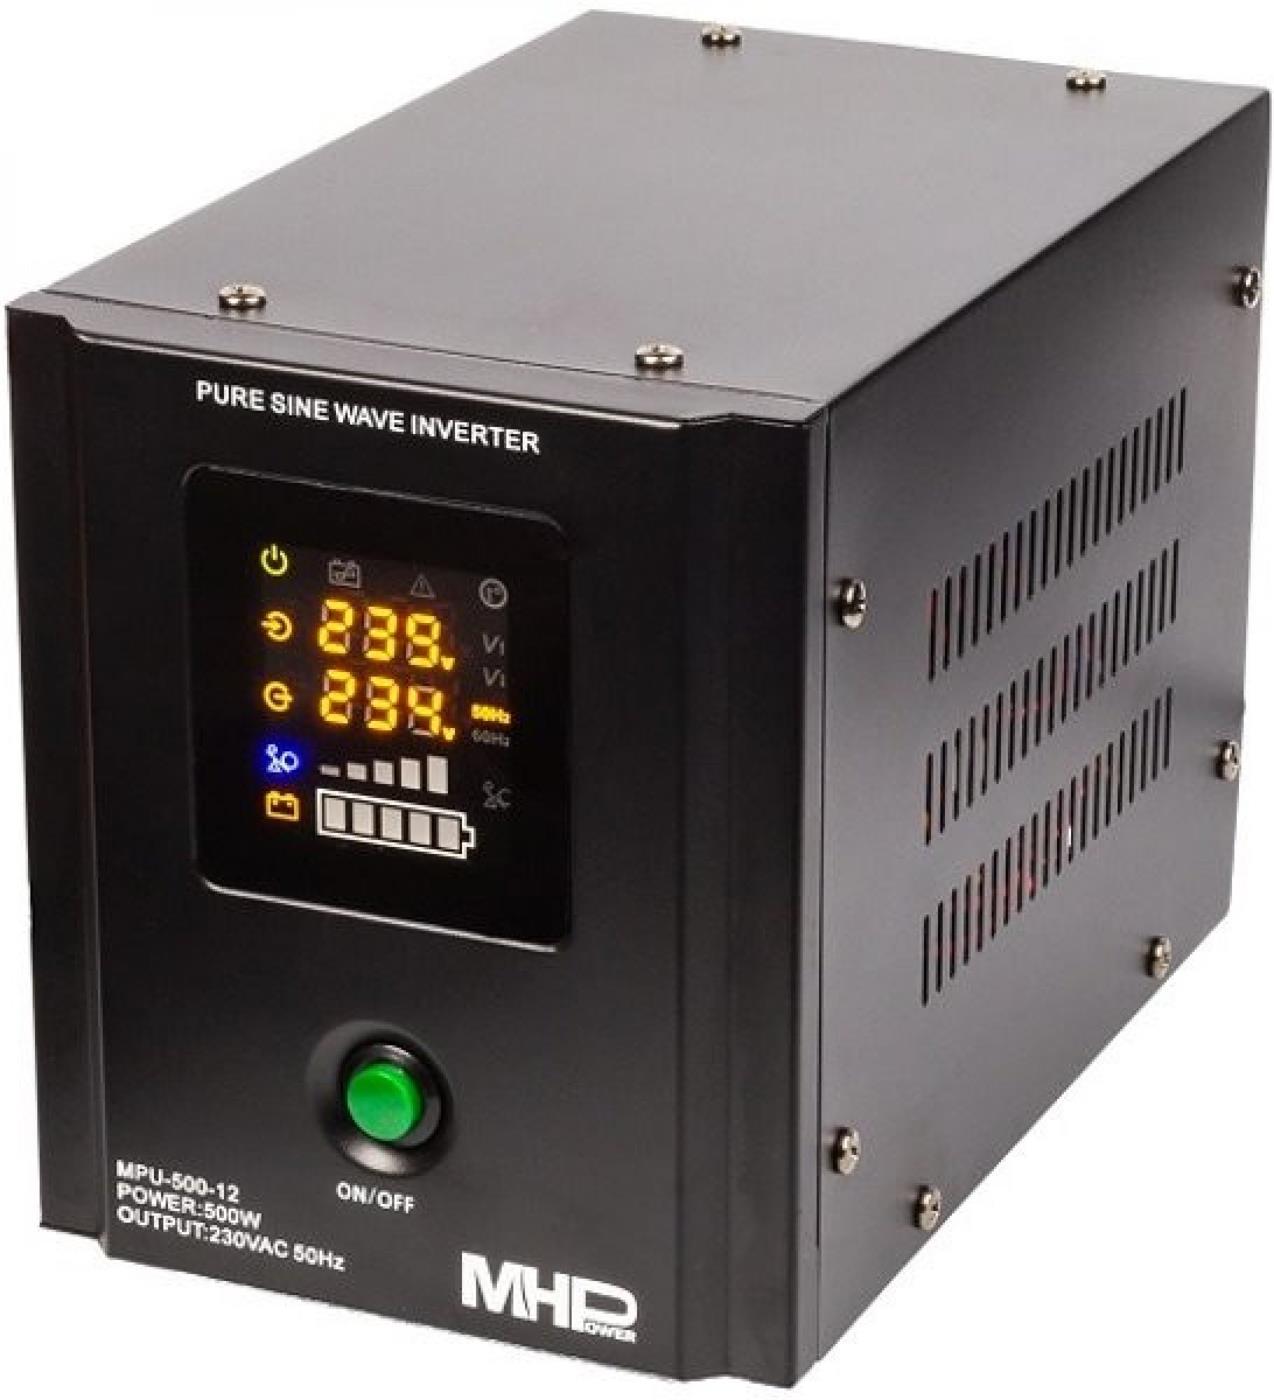 Backup power supply MHPower MPU-300-12, UPS, 300W, pure sine, 12V